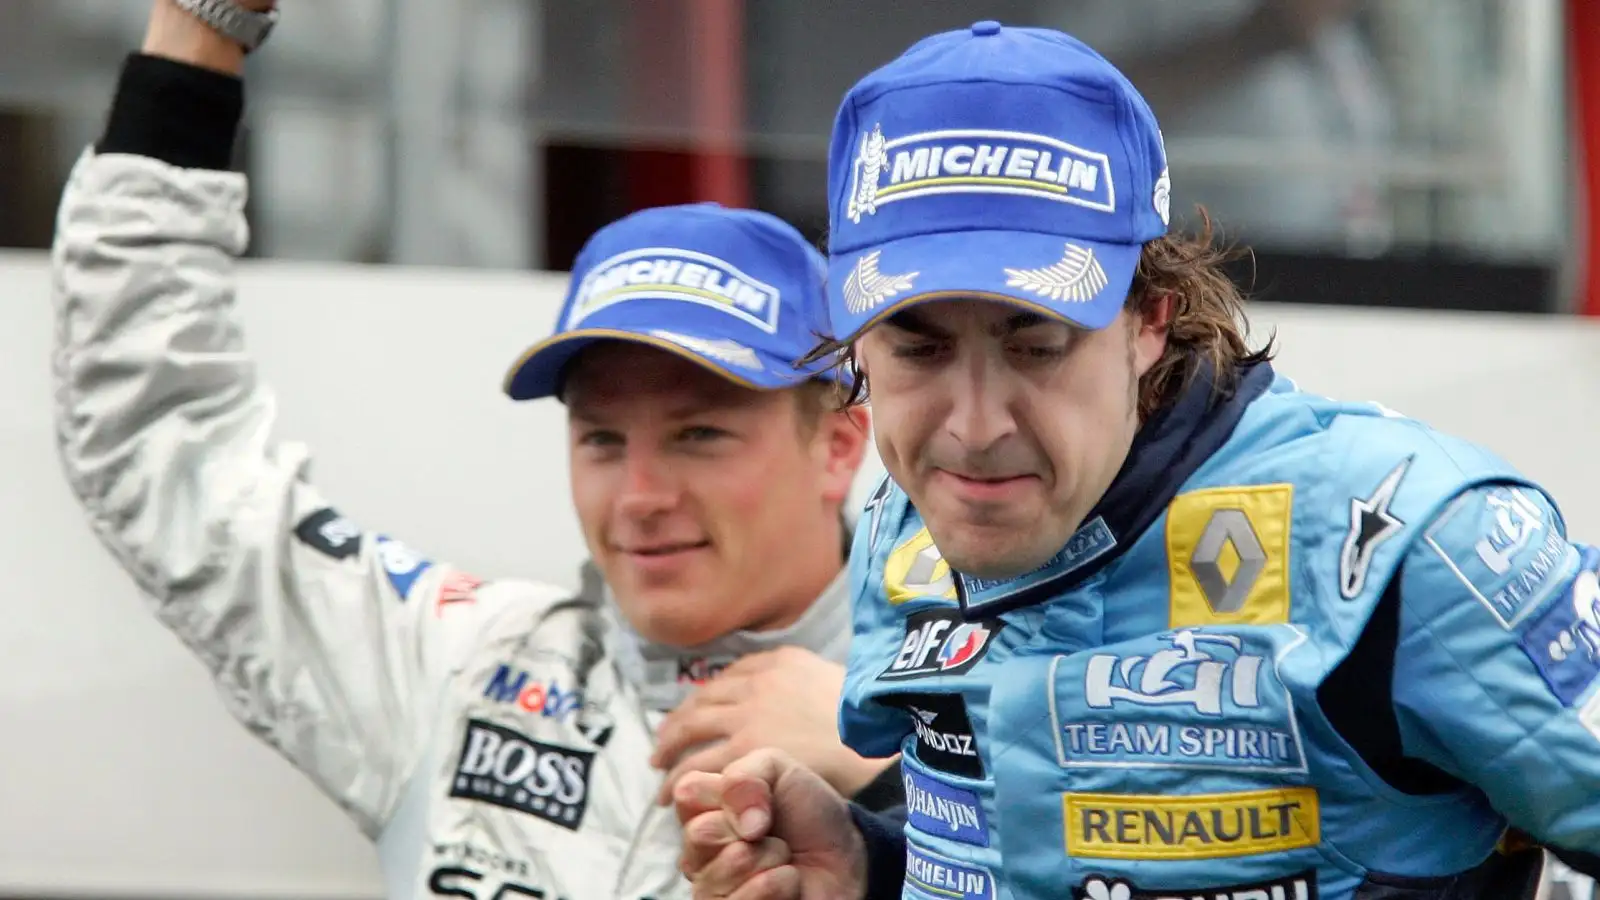 Kimi Raikkonen (McLaren) and Fernando Alonso (Renault) celebrate on the podium at the 2005 Belgian Grand Prix at Spa.